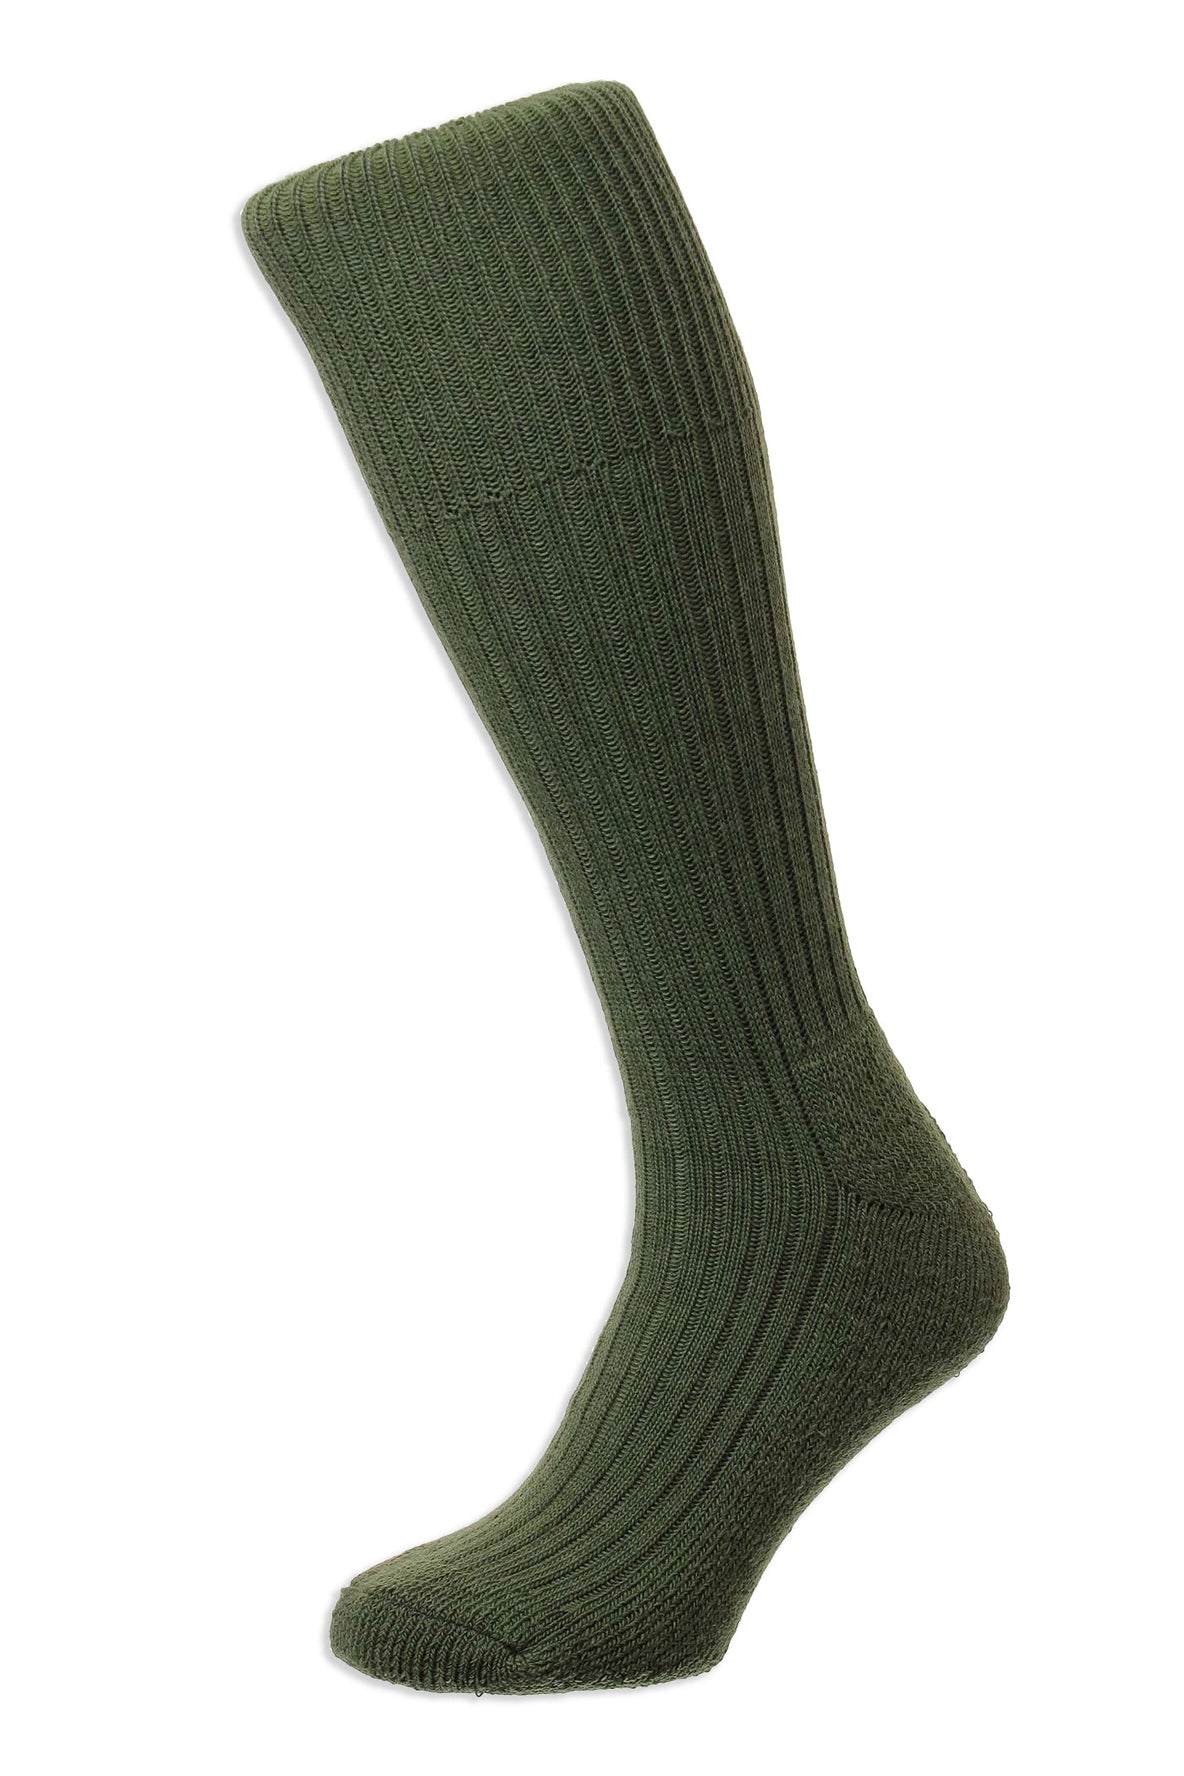 Olive The Original Commando Sock h&amp;J Hall wool 